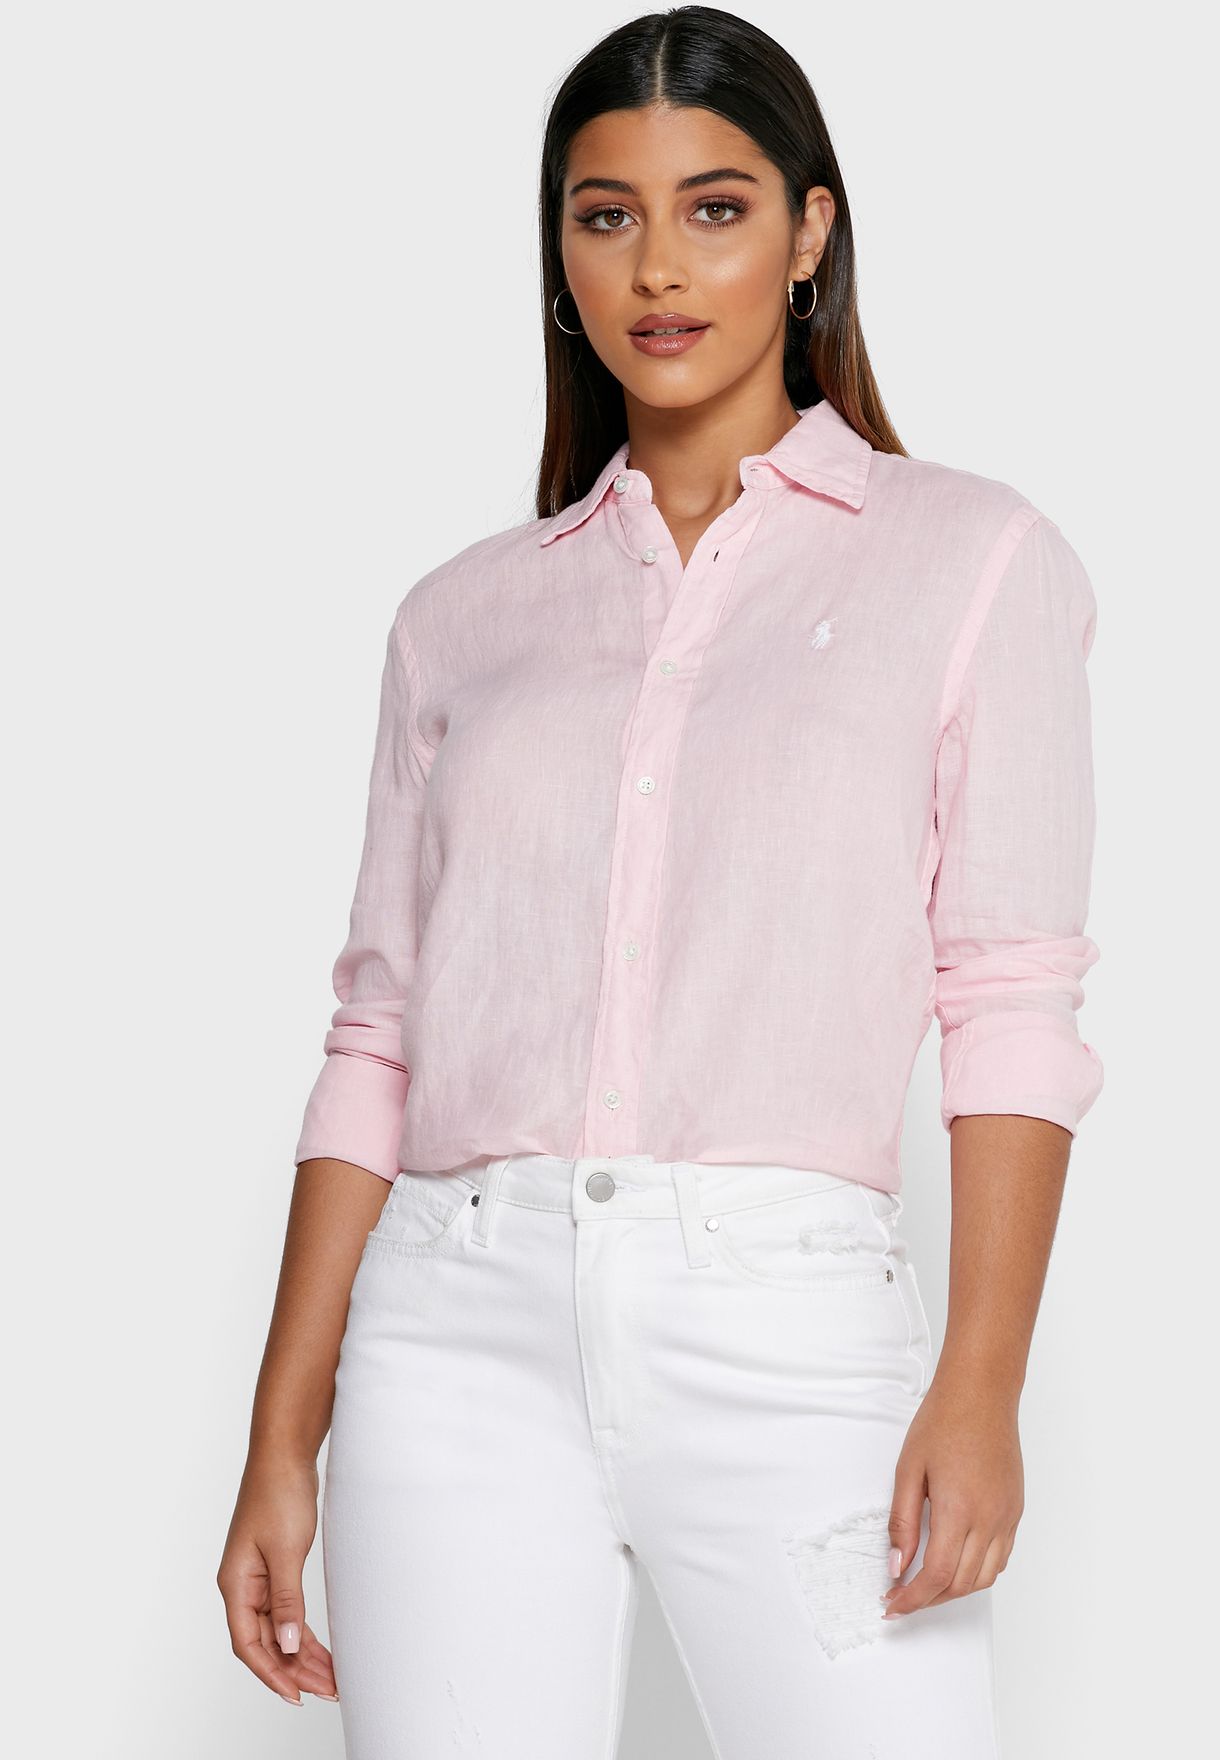 women's polo button down shirt